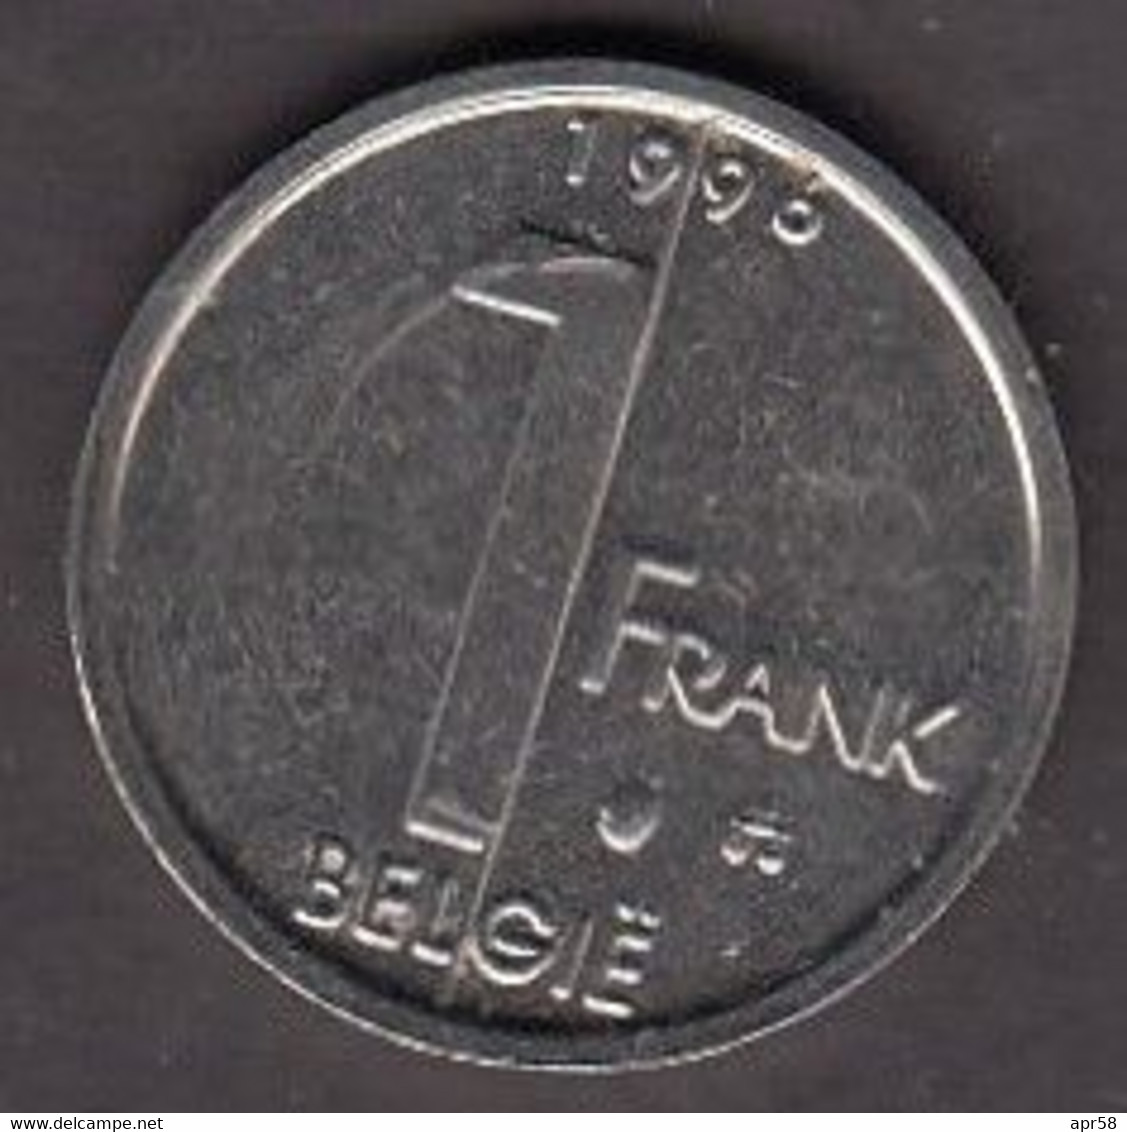 1996-1 Frank - 1 Frank